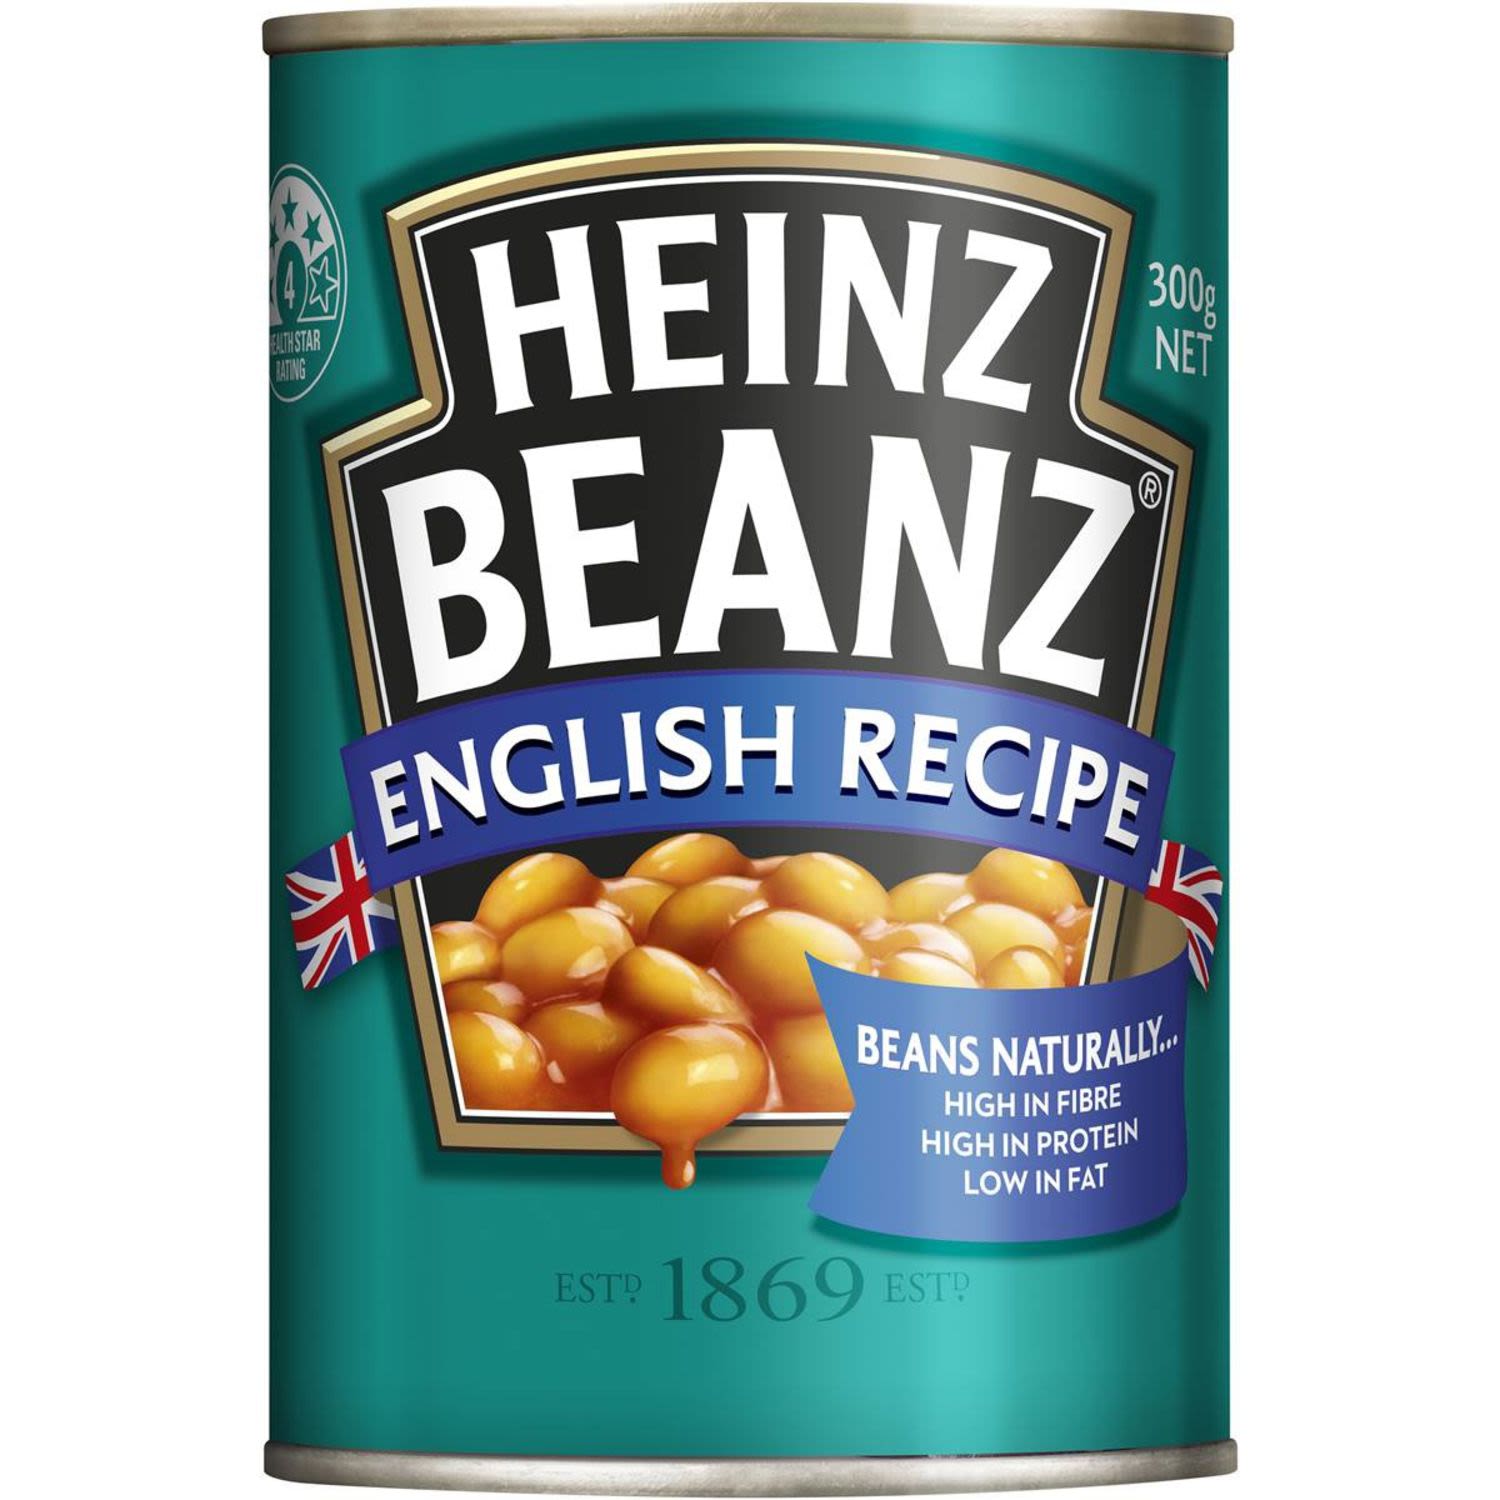 Heinz Baked Beans English Recipe, 300 Gram